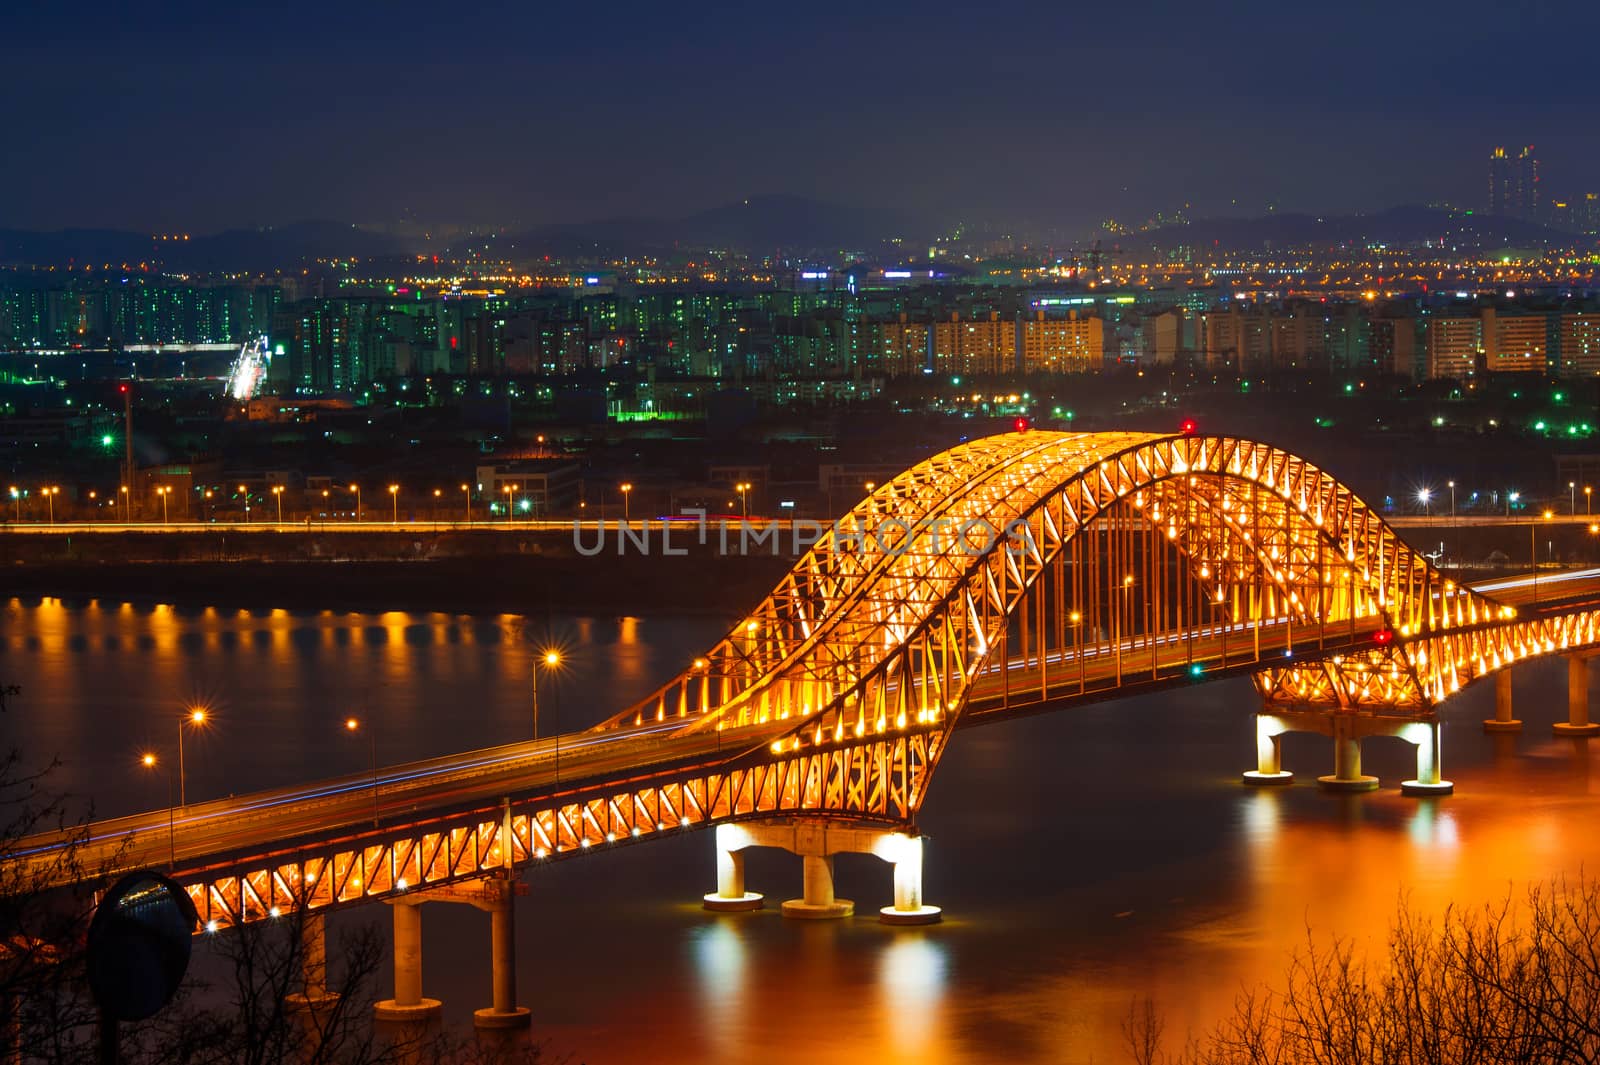 Banghwa bridge at night,Korea by gutarphotoghaphy